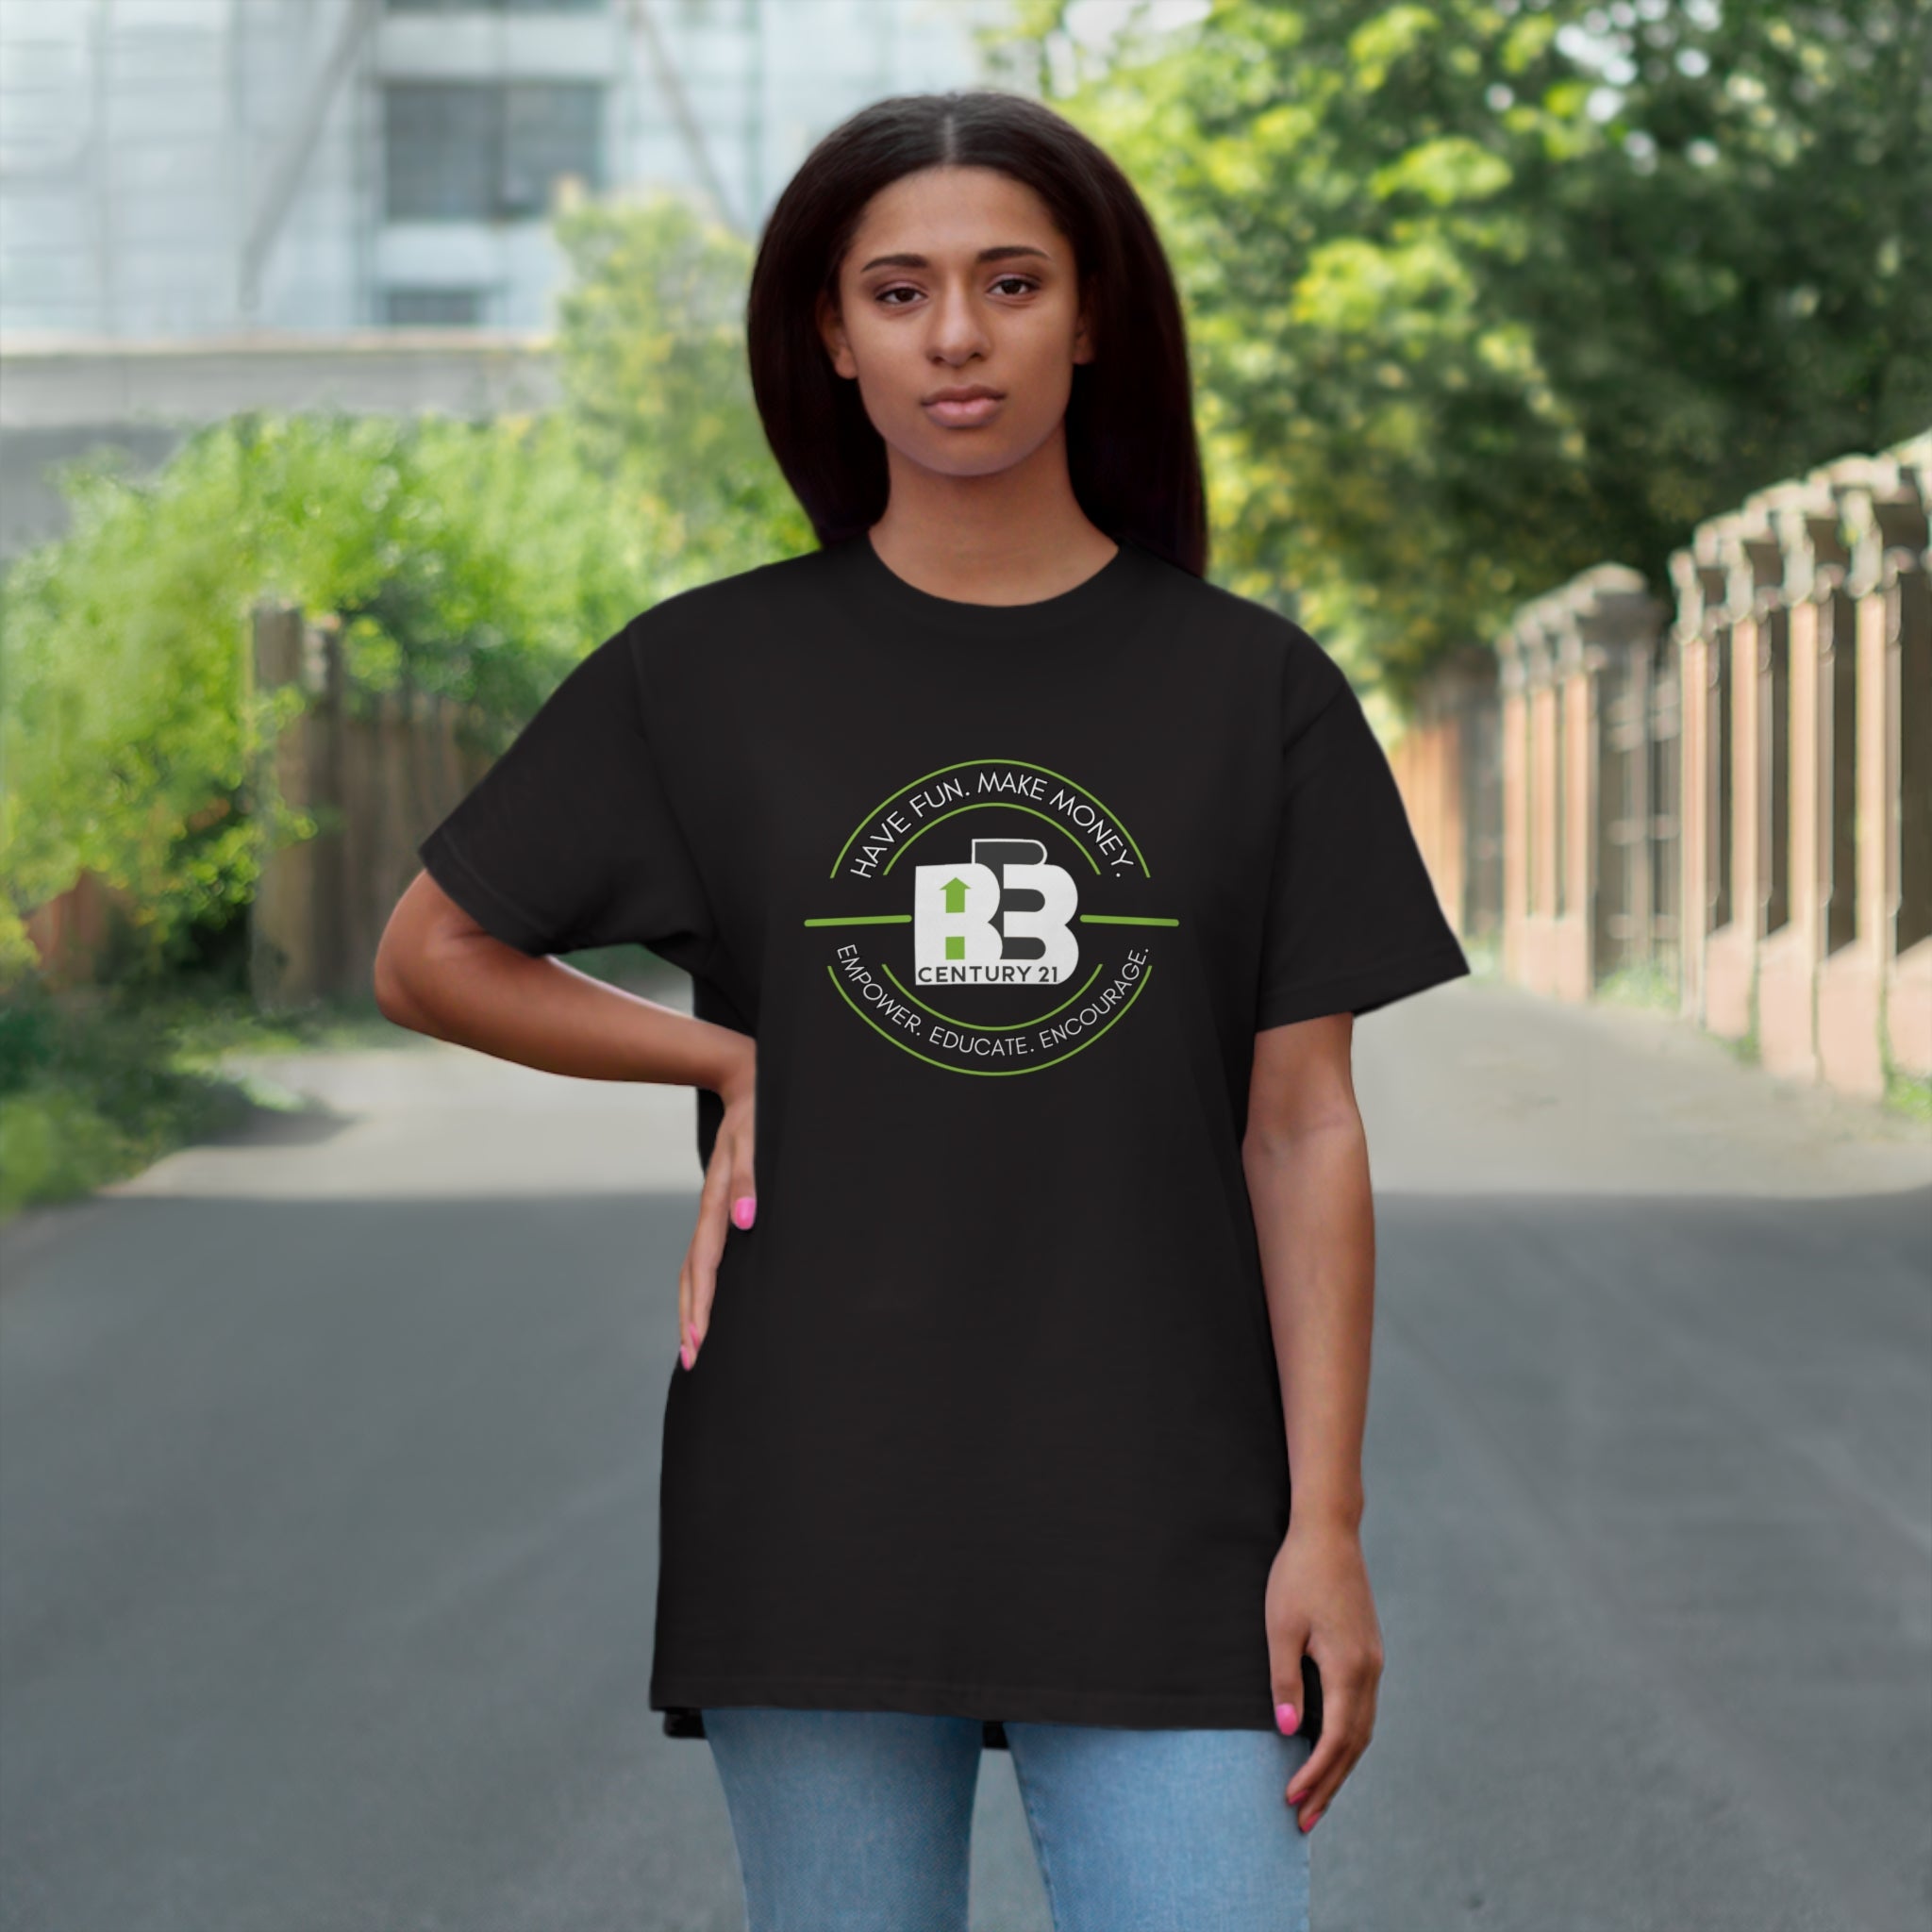 BE3 Have Fun Make Money Logo Single Jersey T-shirt